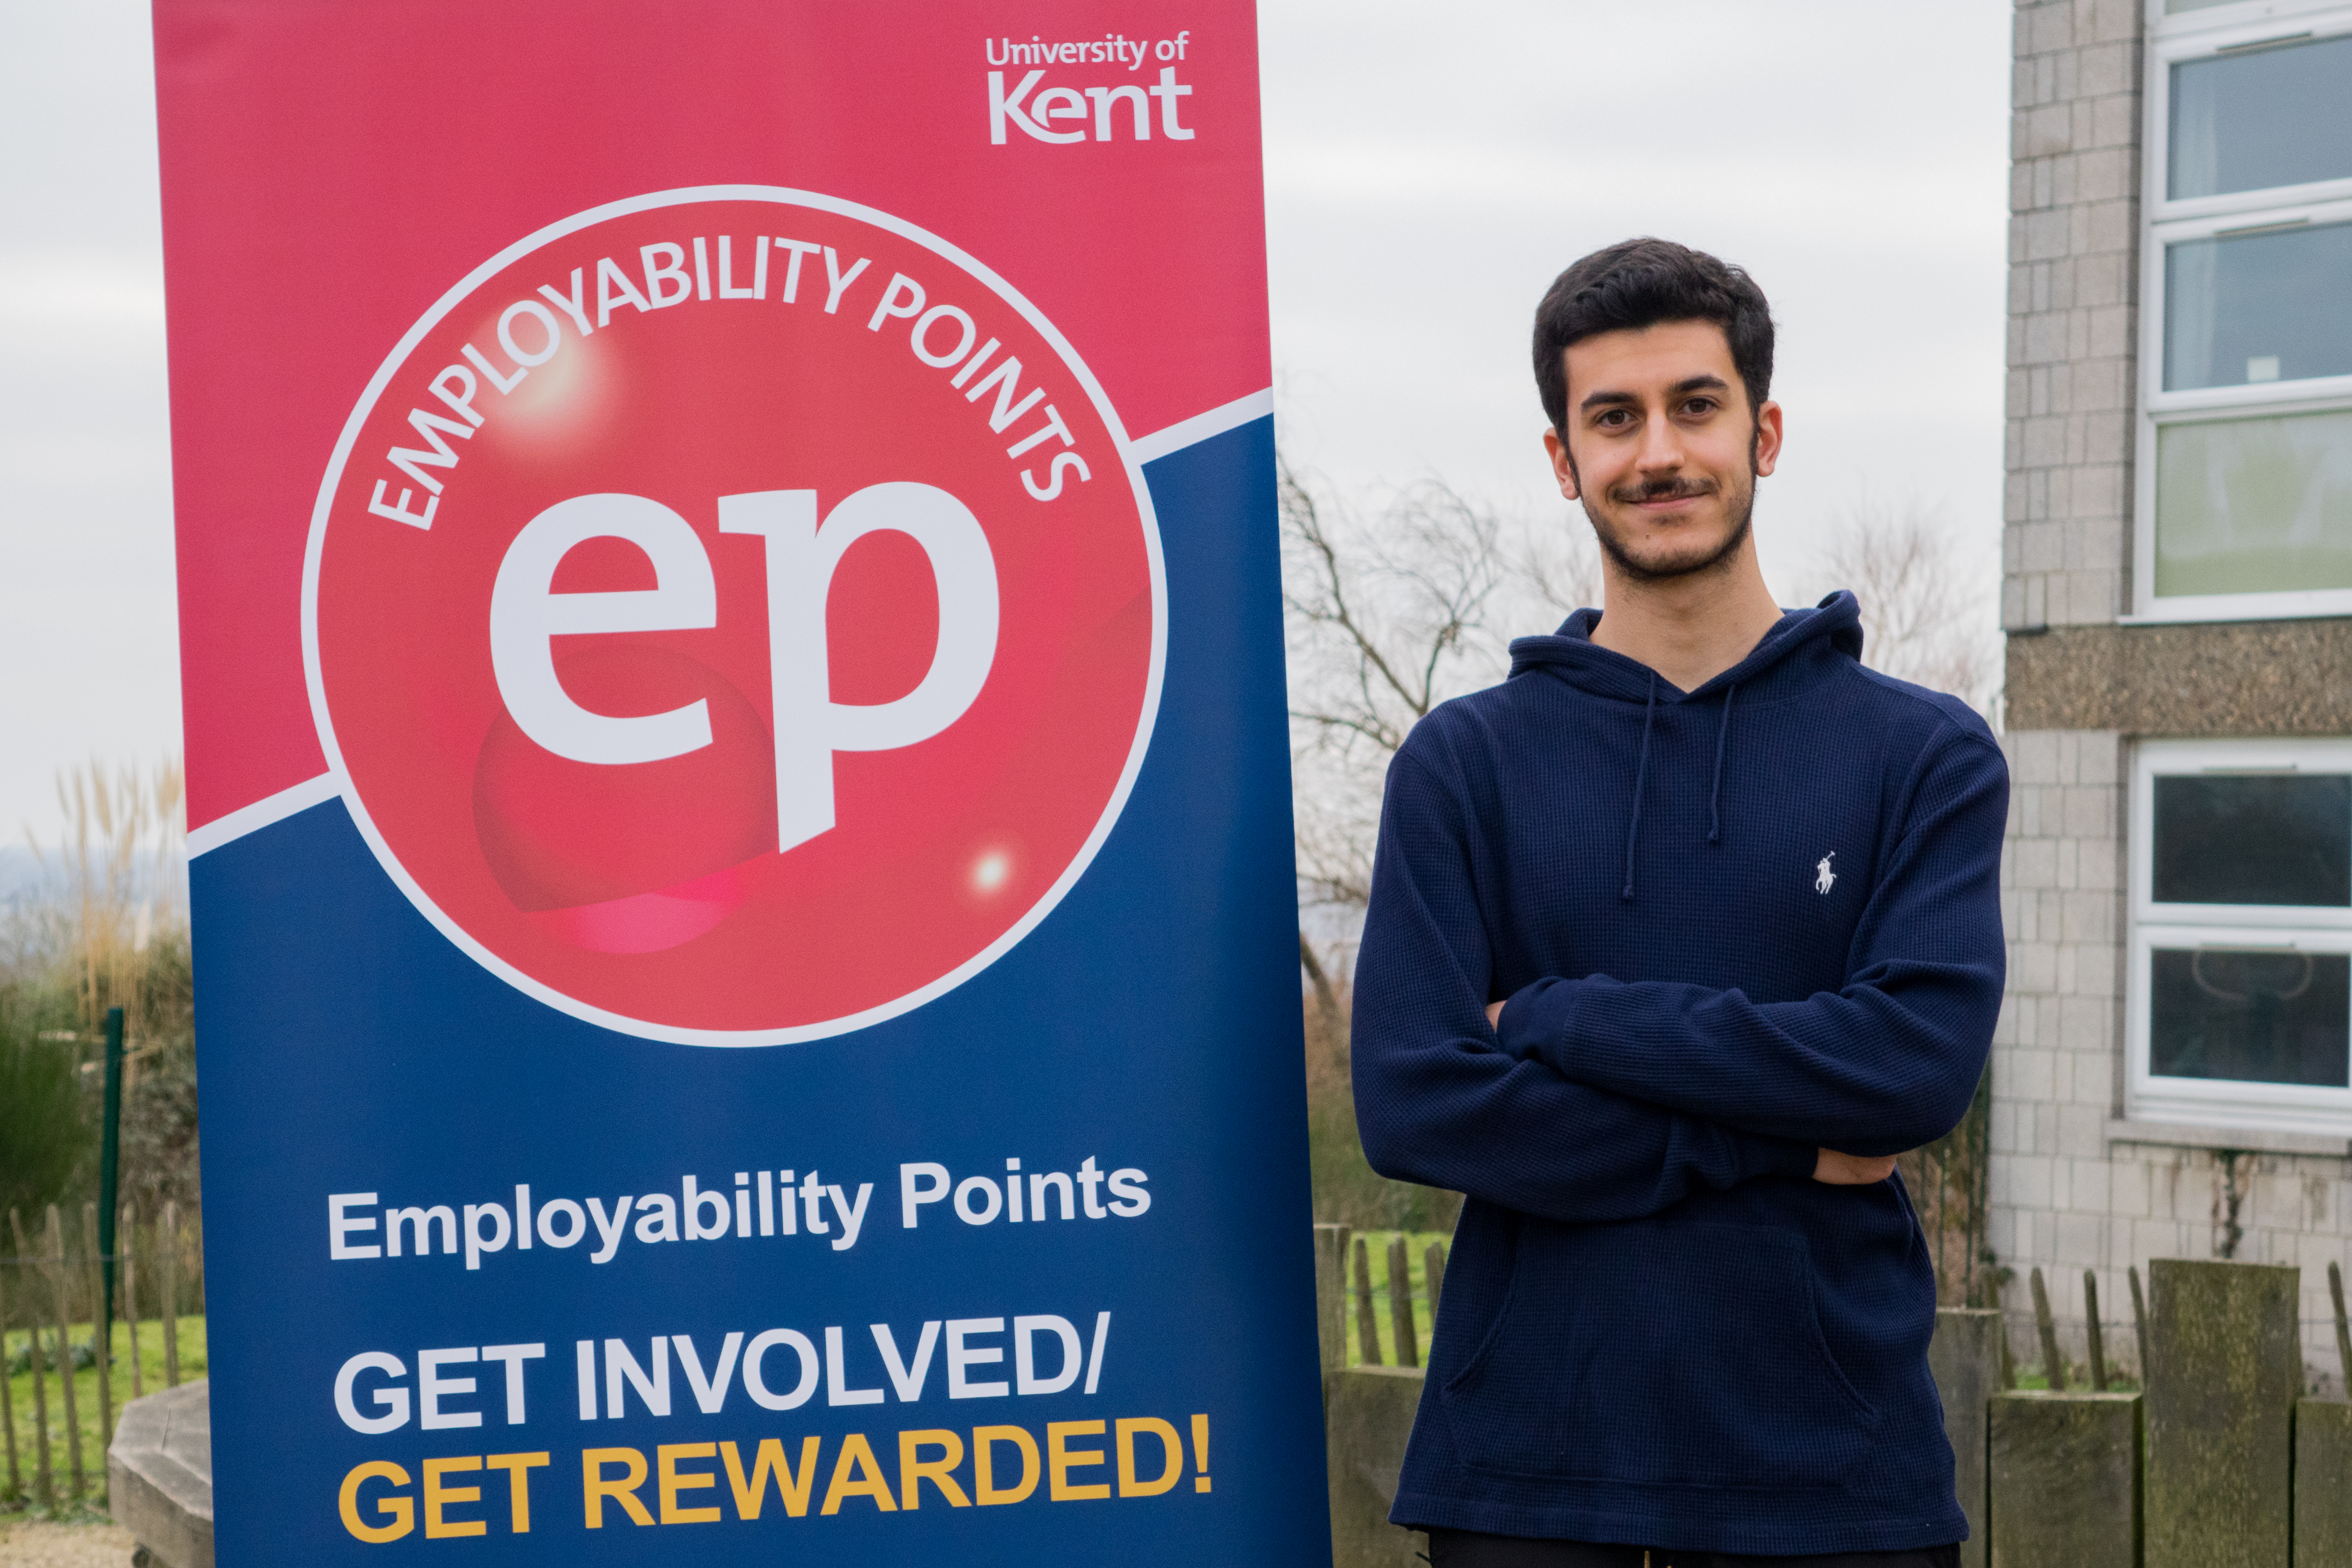 Student Sami standing next to Employability Points scheme banner